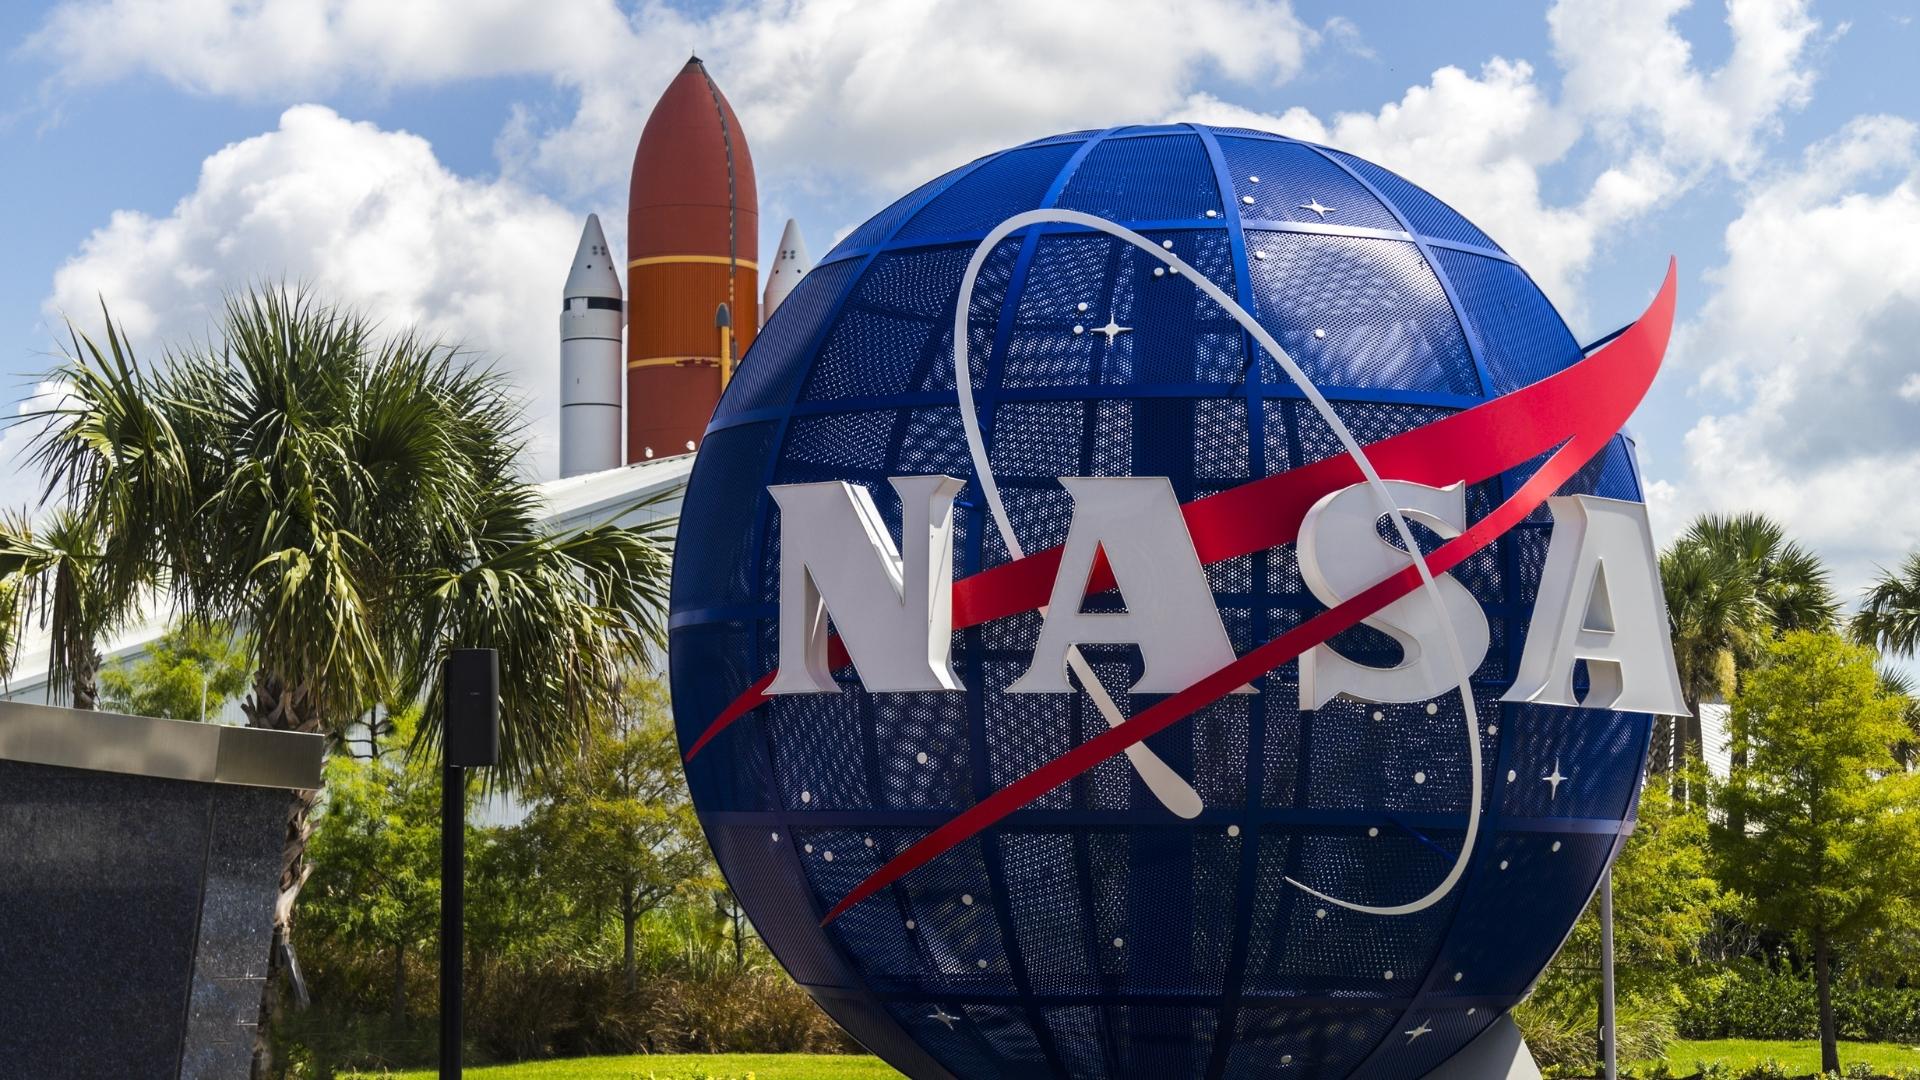 Nasa Globe and Space Shuttle